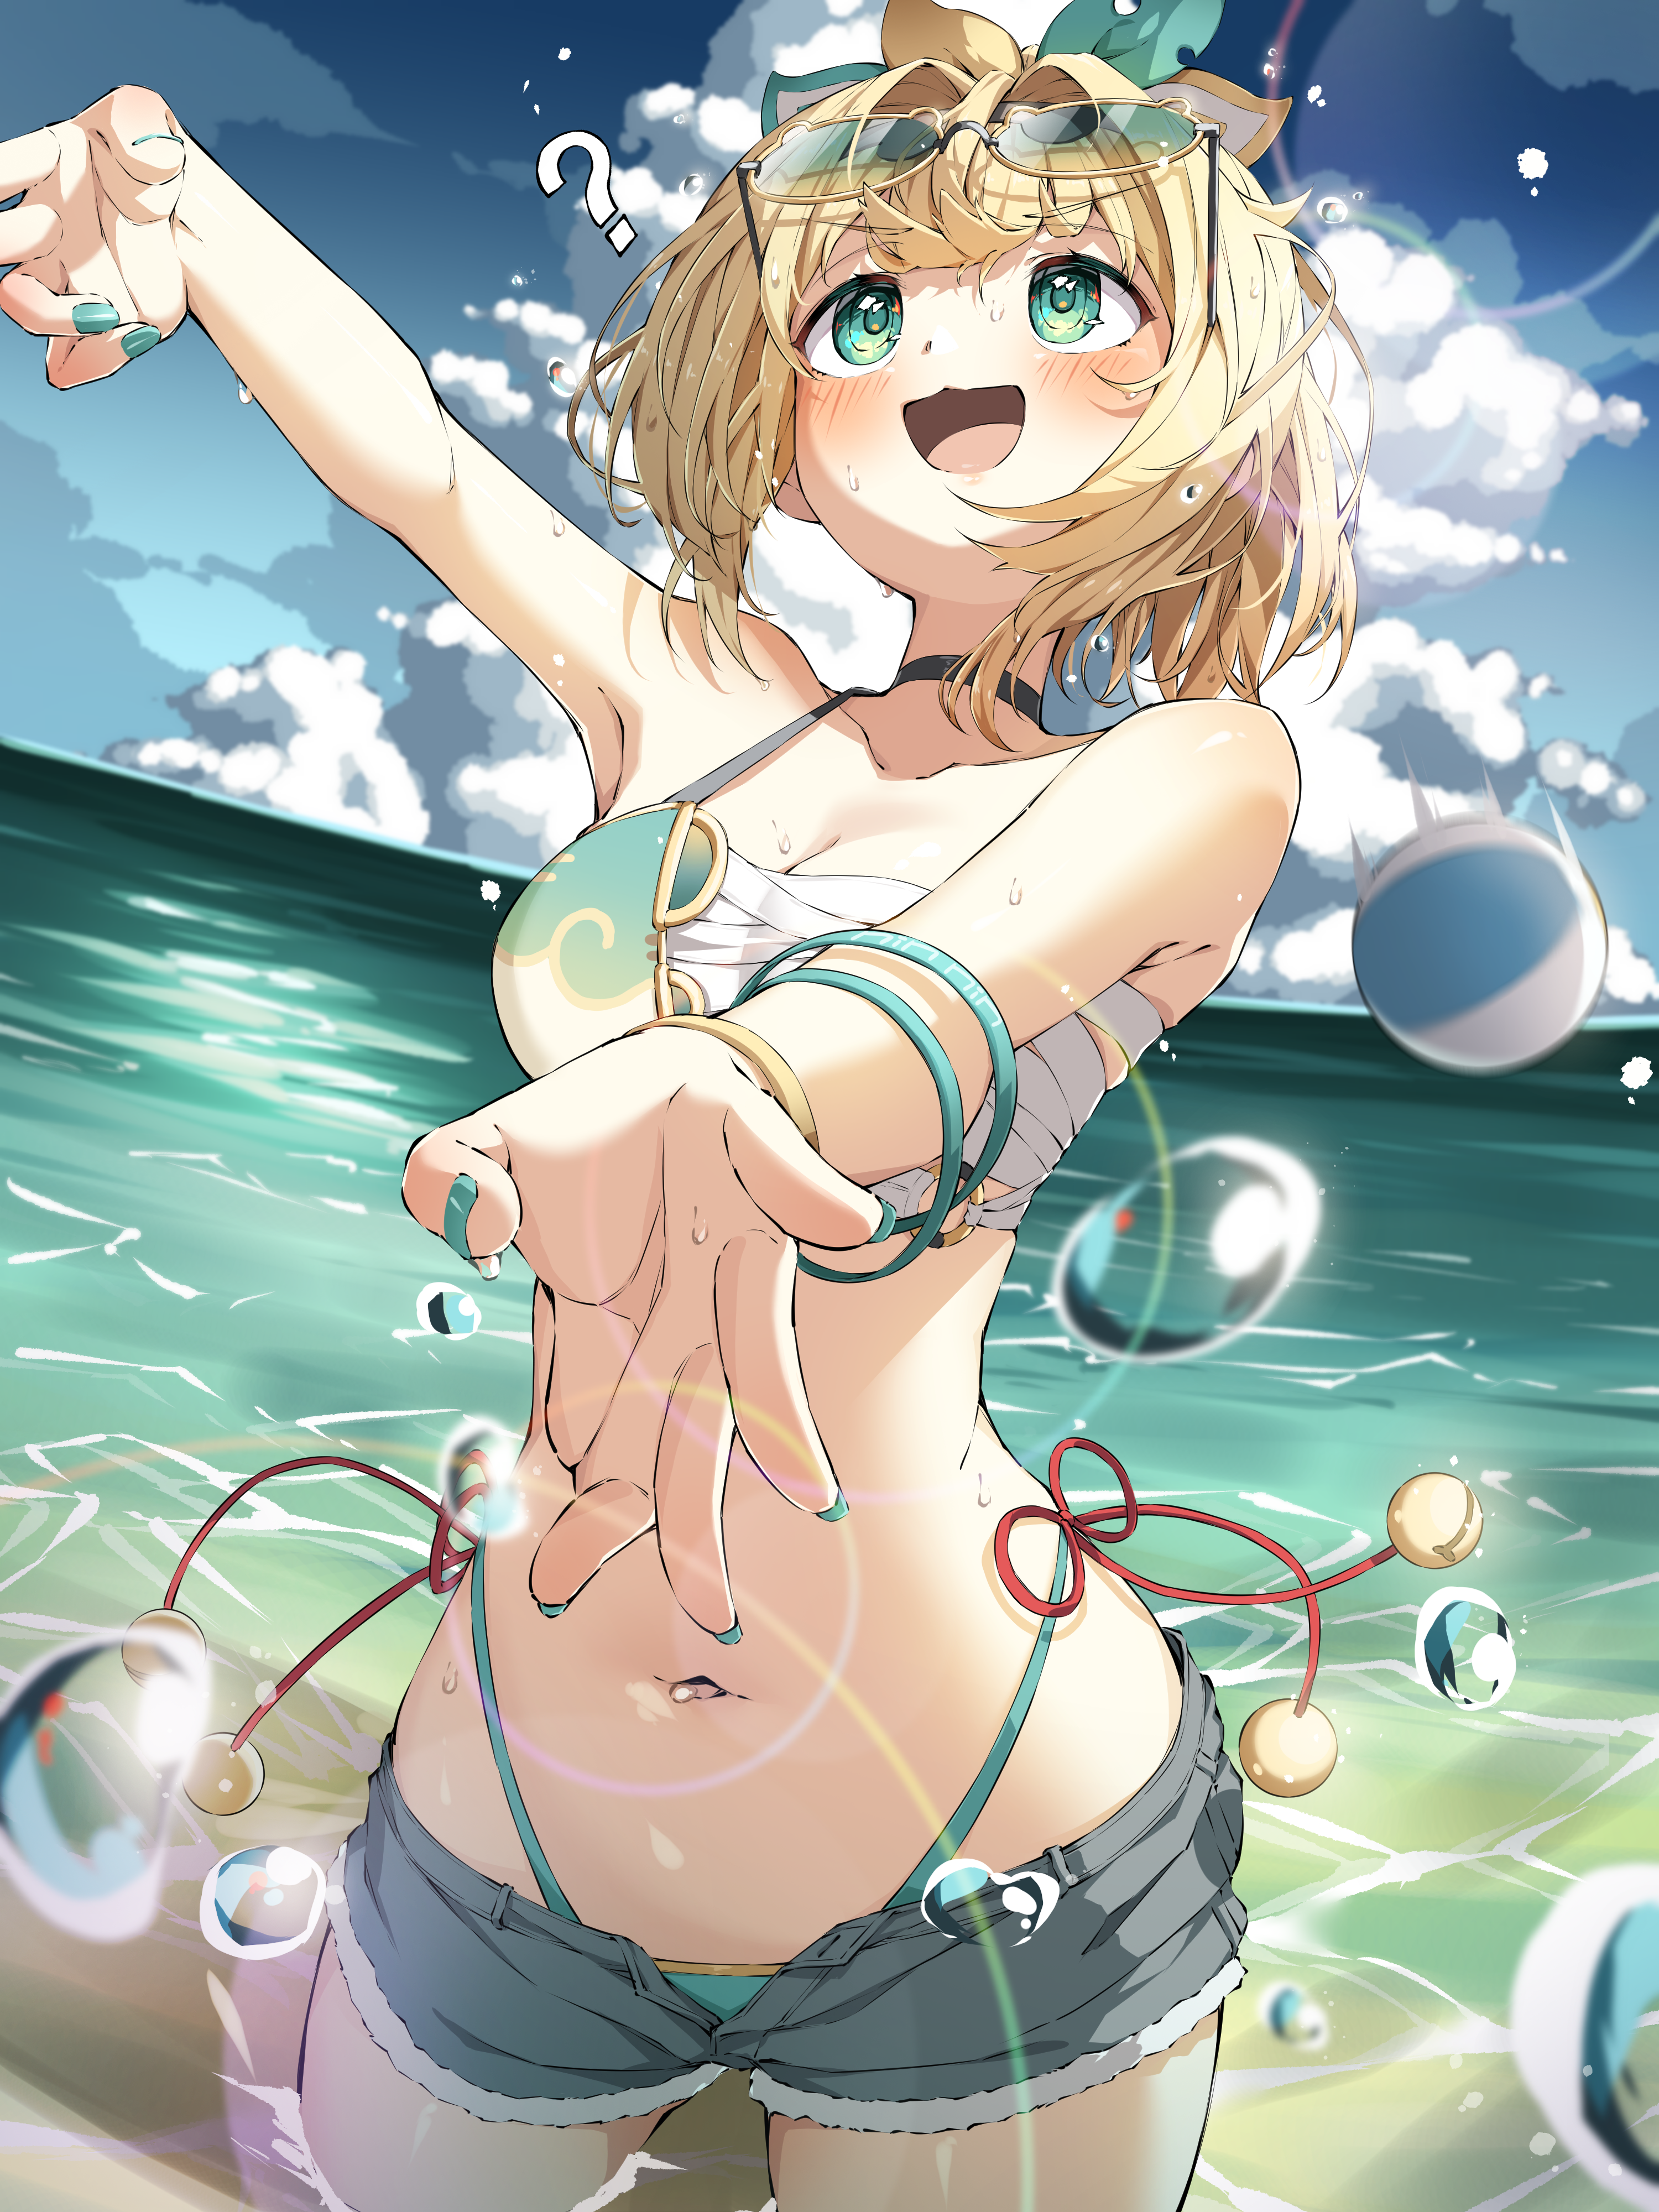 Anime 3000x4000 ama rei Pixiv anime anime girls water drops beach open shorts Kazama Iroha Hololive Virtual Youtuber blue eyes blonde